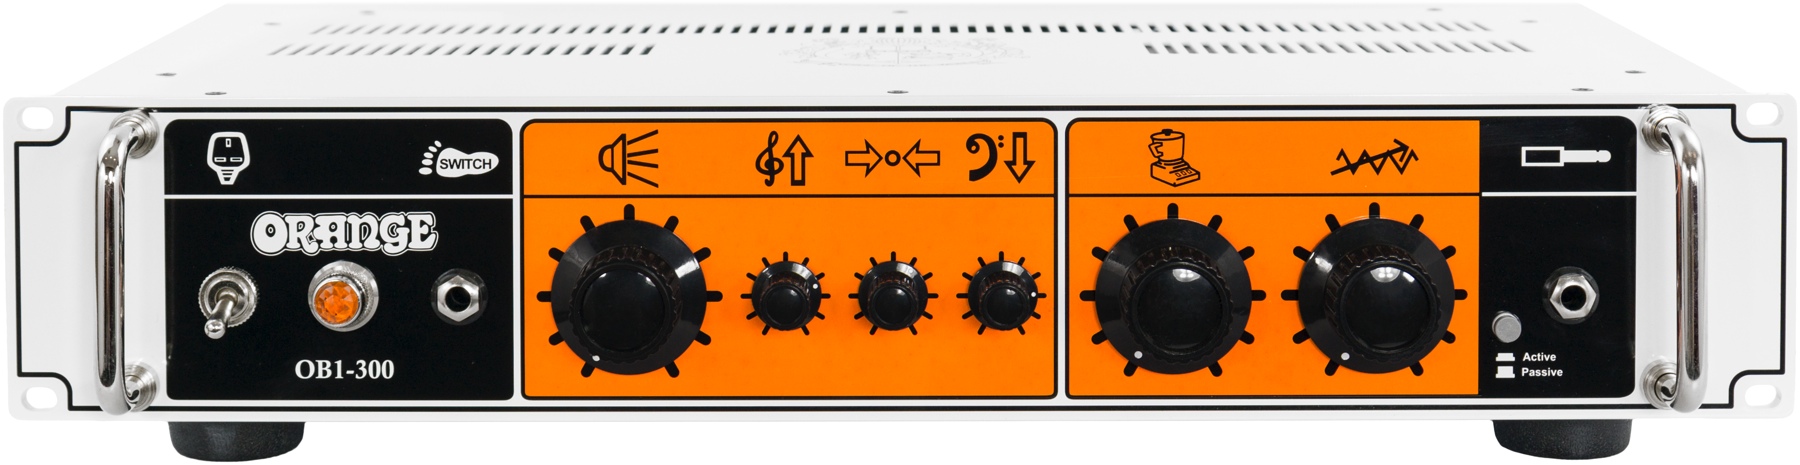 Orange Ob1-300 Rack Mountable Bass Head - Versterker top voor bas - Variation 1